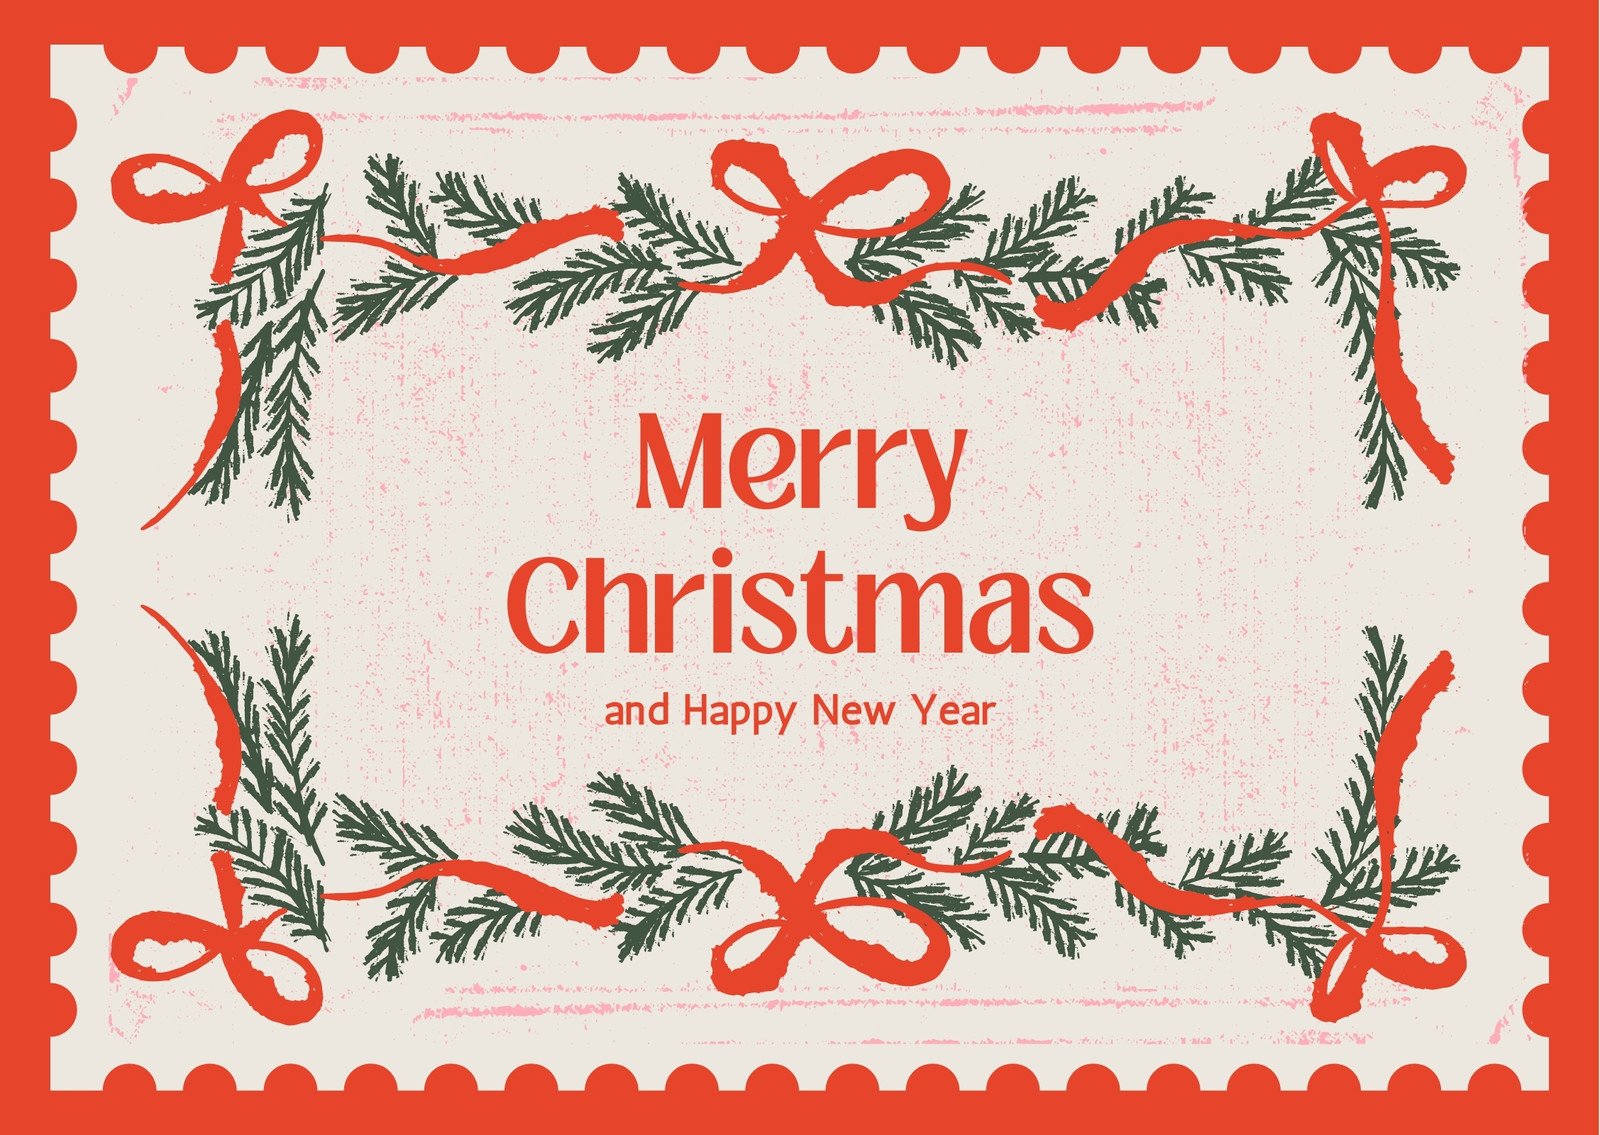 https://marketplace.canva.com/EAFUsSjnlBY/1/0/1600w/canva-red-vintage-frame-merry-christmas-card-landscape-YeVdxJfaq08.jpg